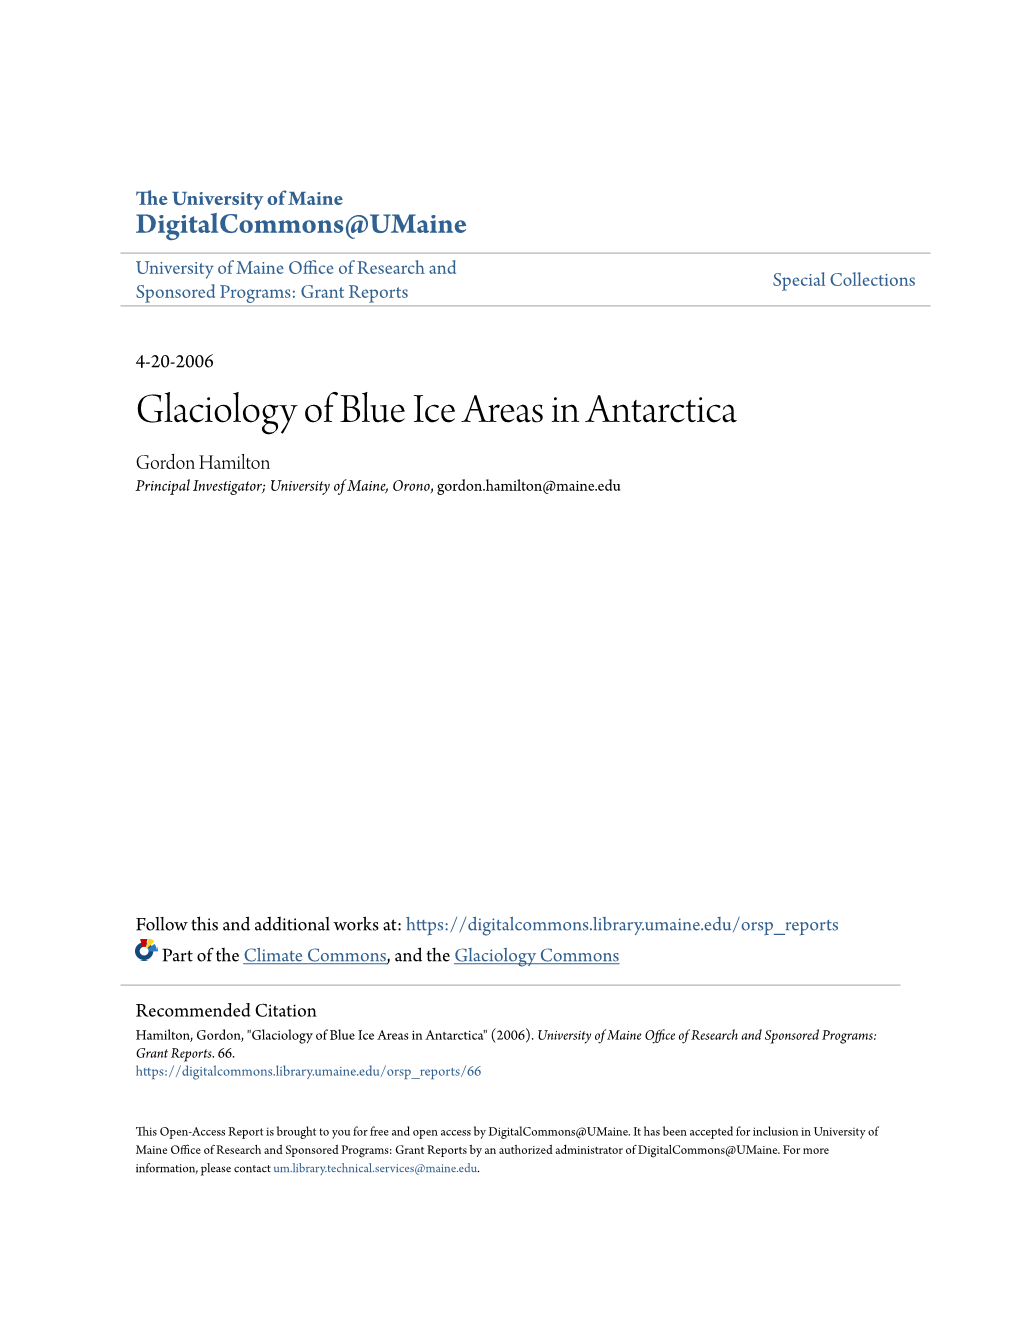 Glaciology of Blue Ice Areas in Antarctica Gordon Hamilton Principal Investigator; University of Maine, Orono, Gordon.Hamilton@Maine.Edu